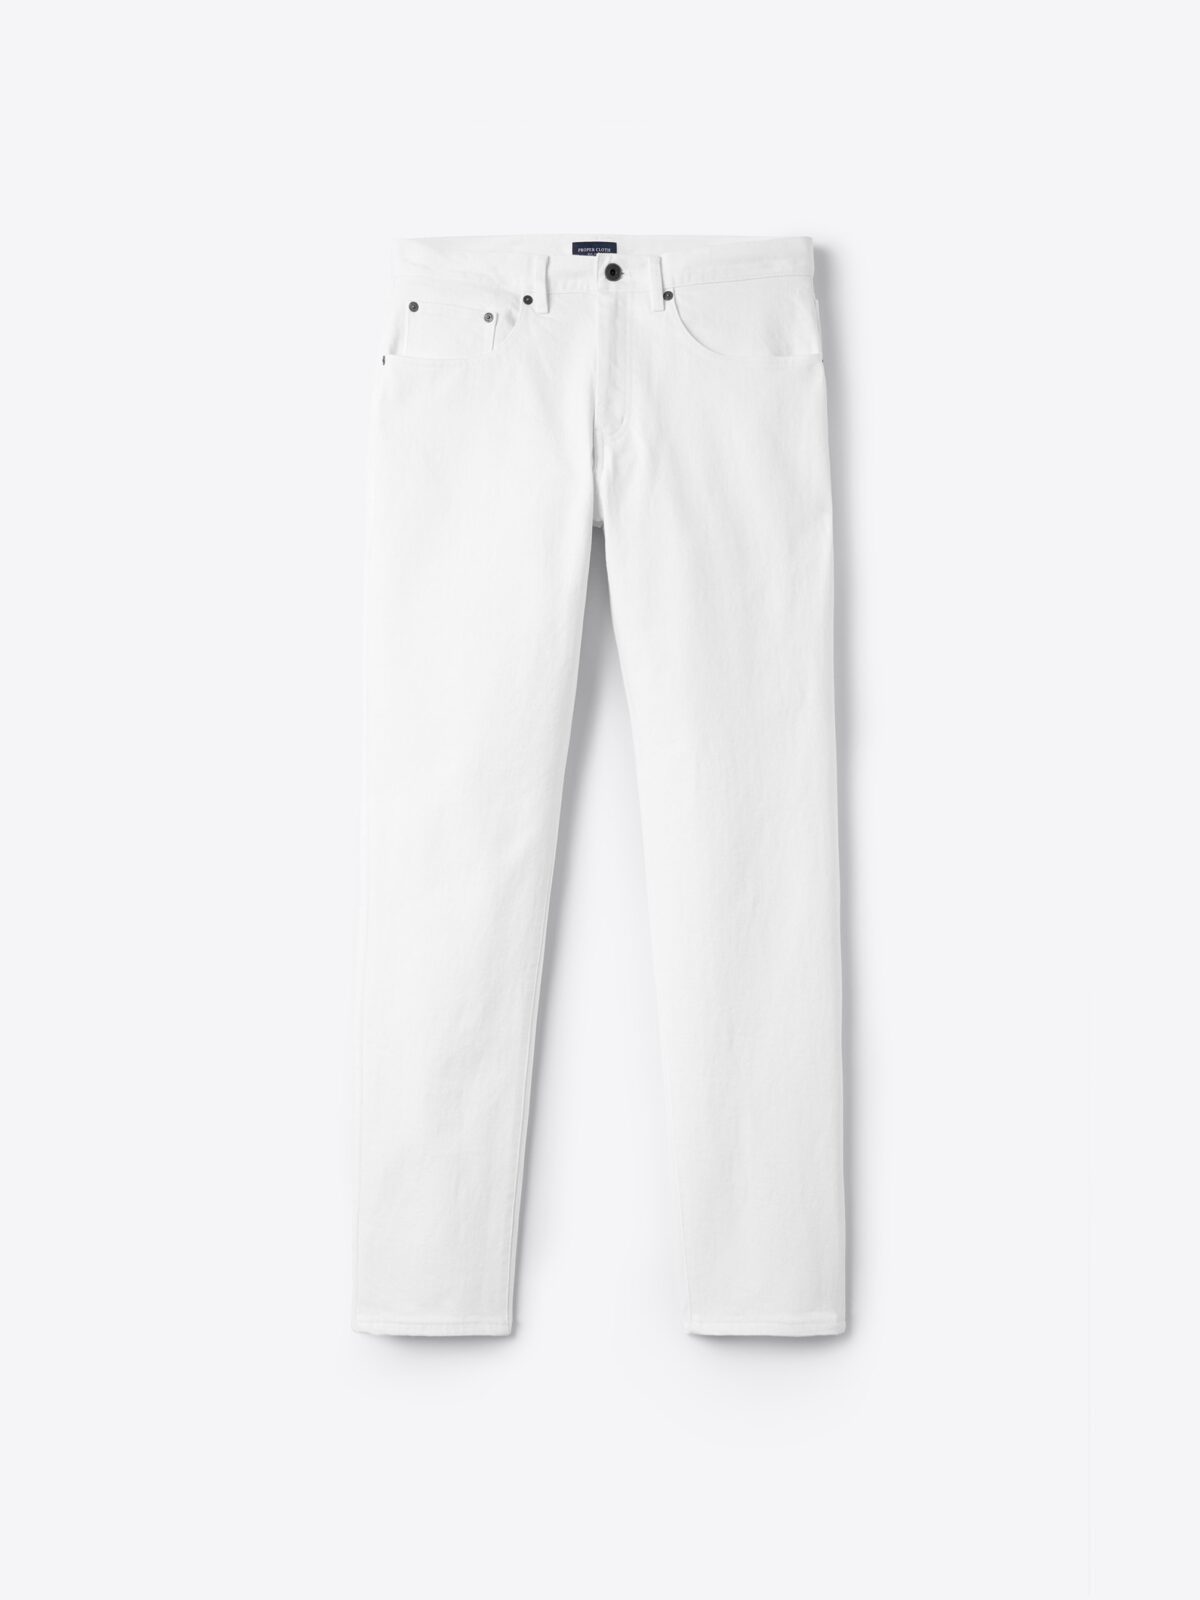 Japanese 12oz Light Wash Indigo Stretch Jeans - Custom Fit Pants